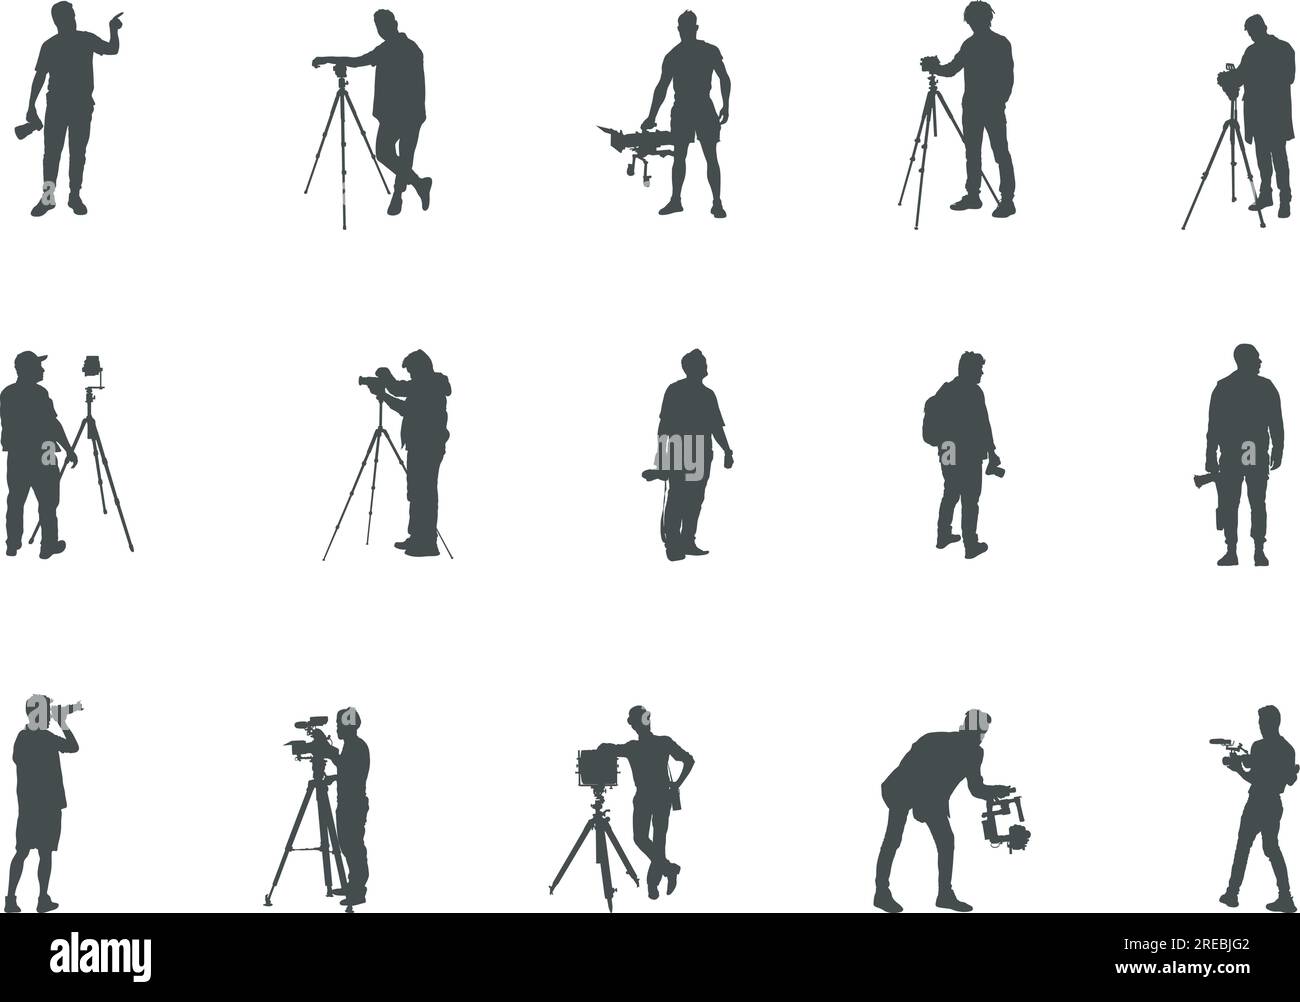 Cameraman silhouette, Photographer silhouettes, Cameraman clipart ...